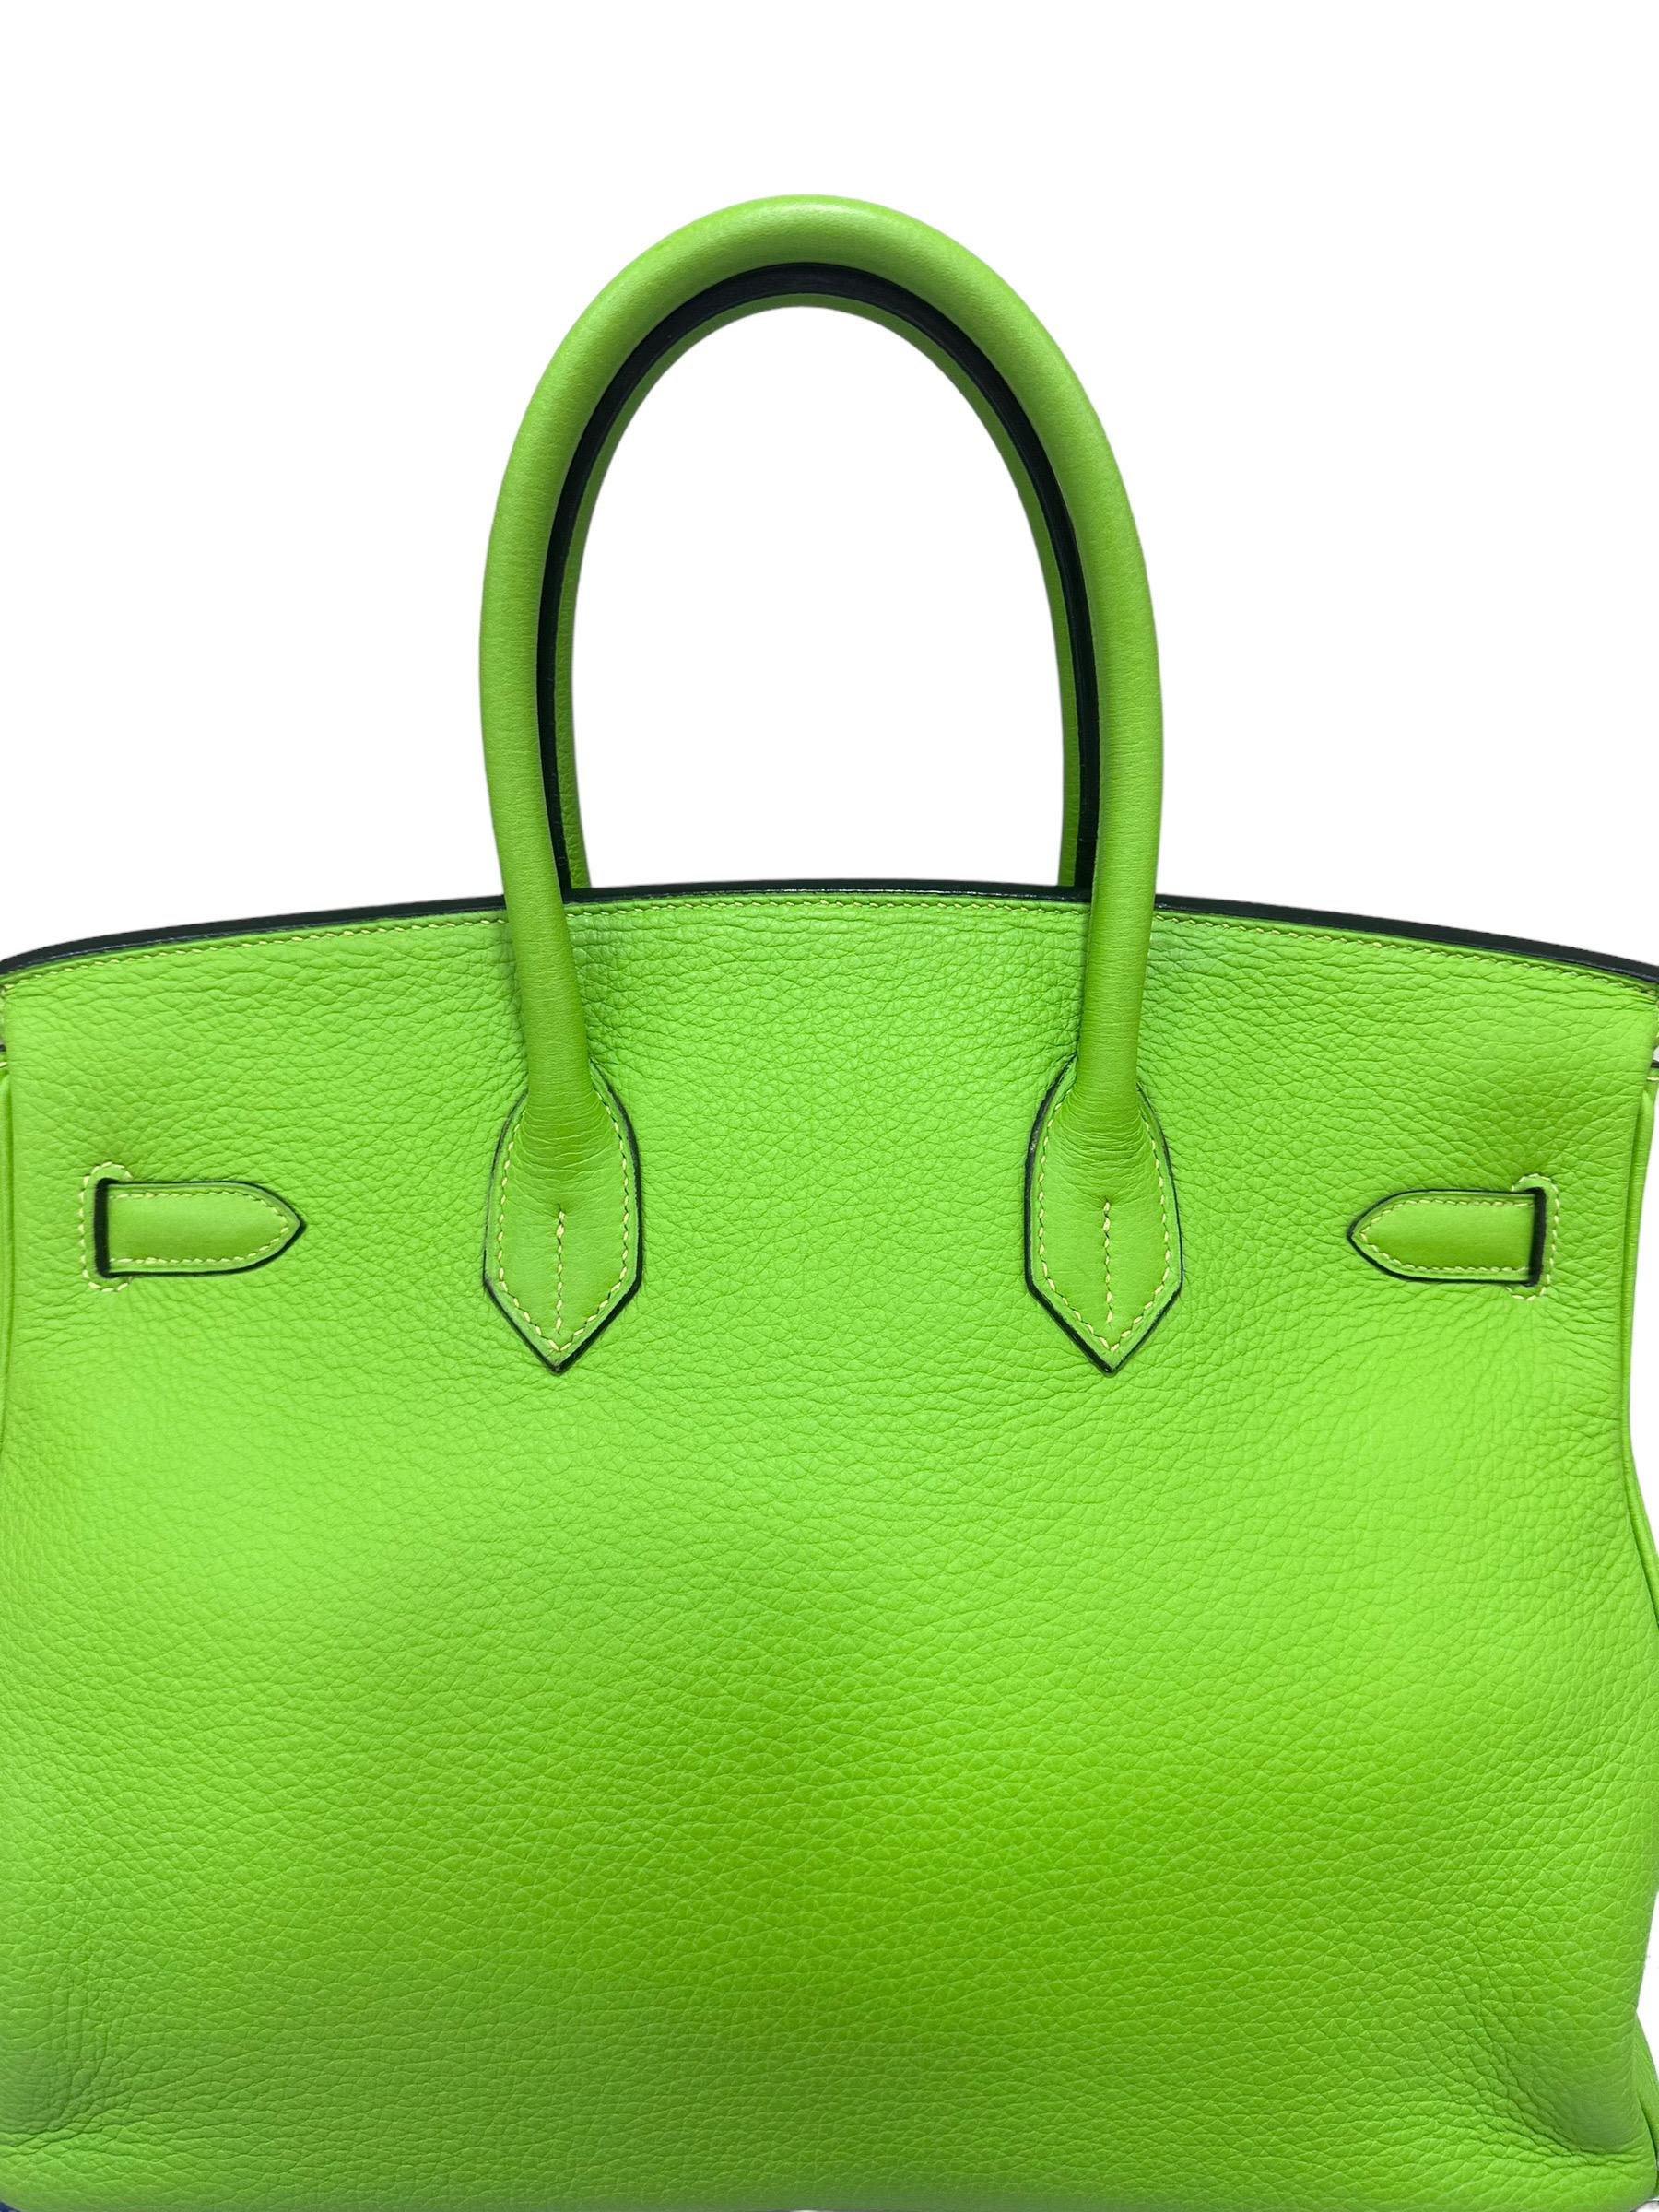 2004 Hermès Birkin 35 Clemence Leather Green Apple Top Handle Bag 4